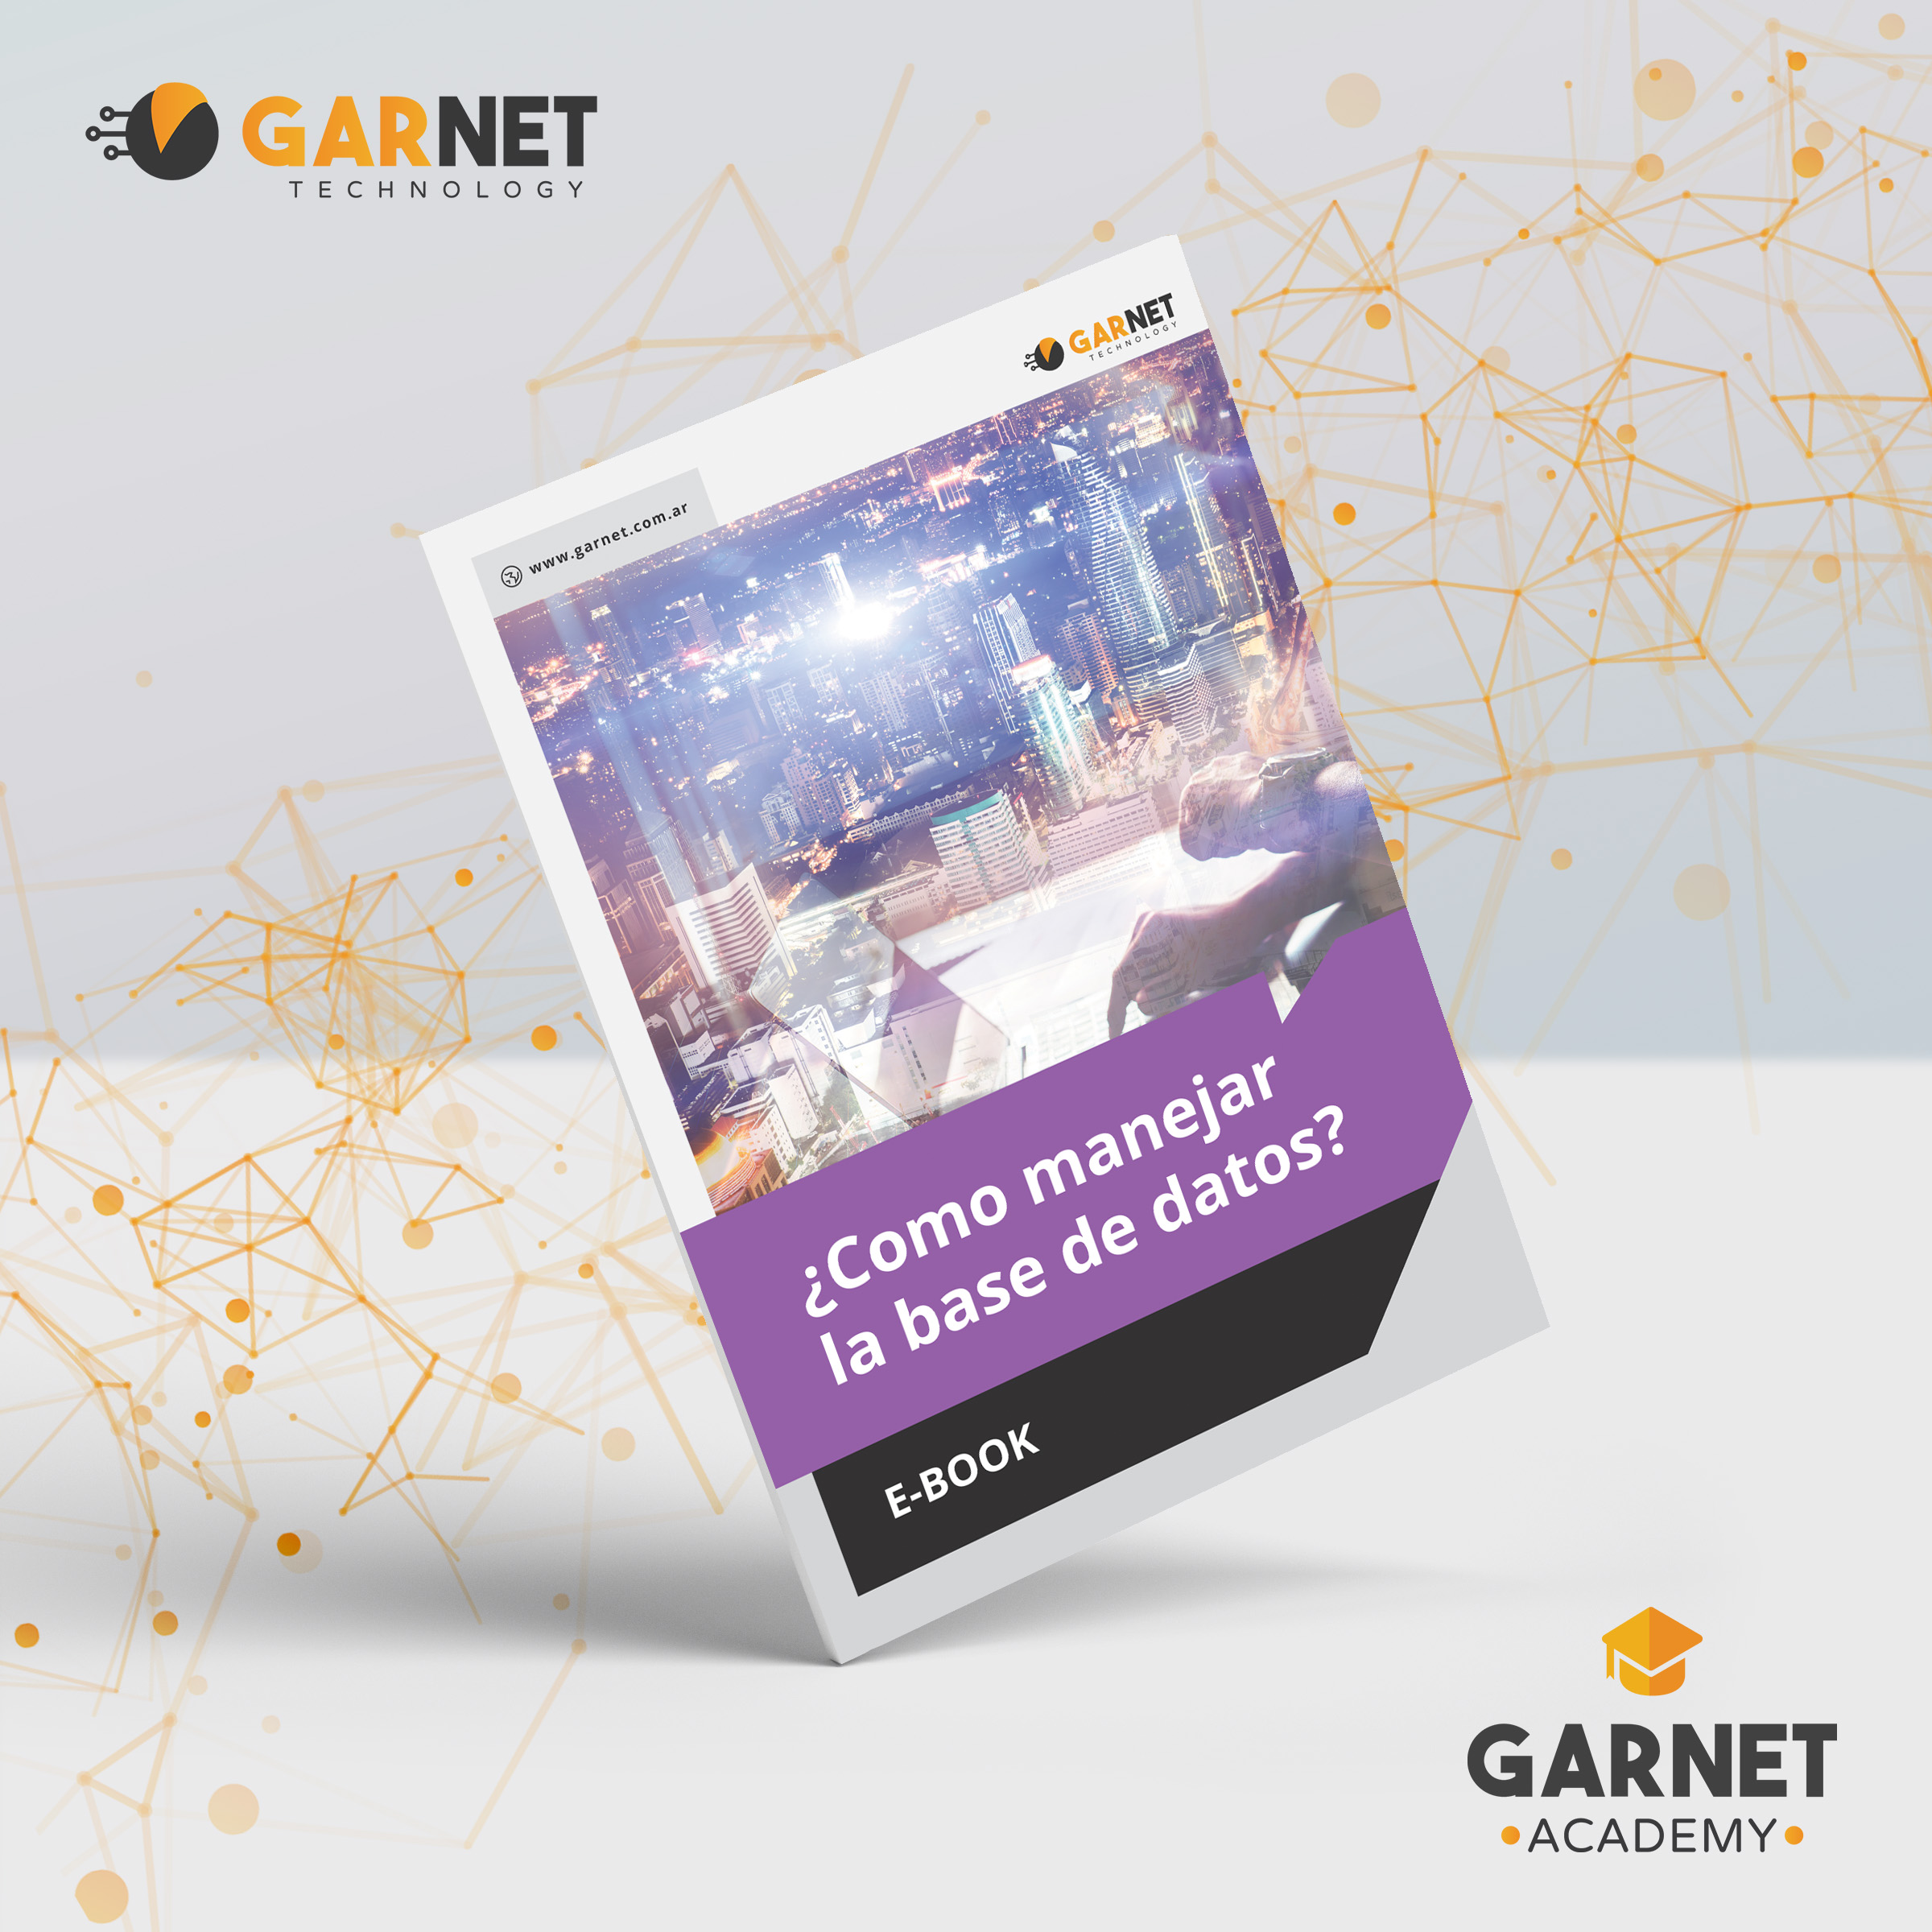 Como manejar una base de datos por Garnet Technology